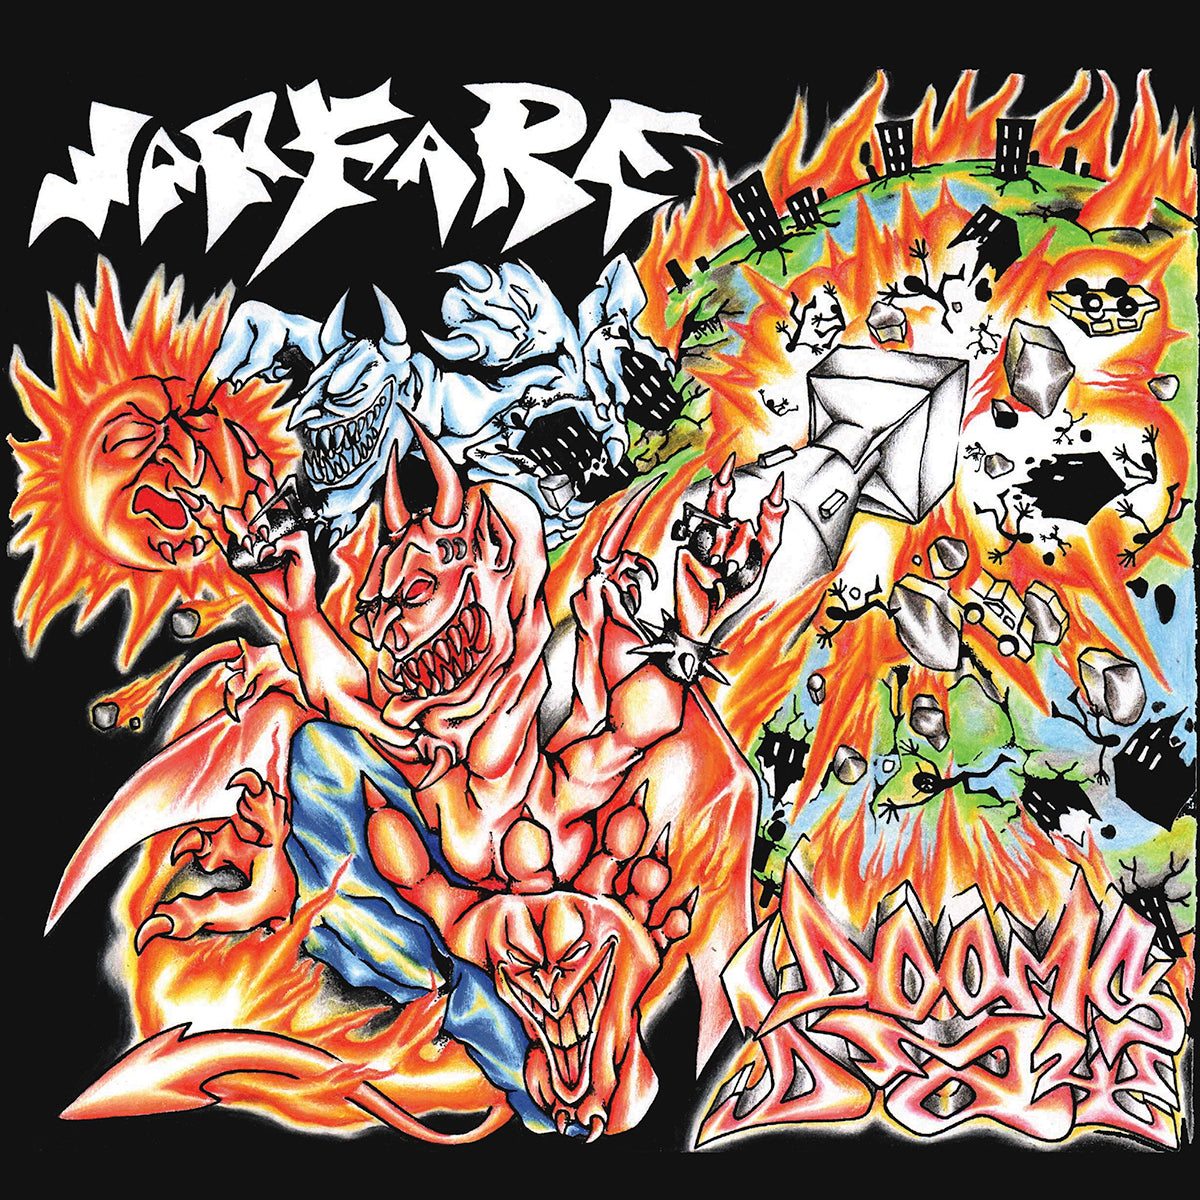 WARFARE "Doomsday" LP